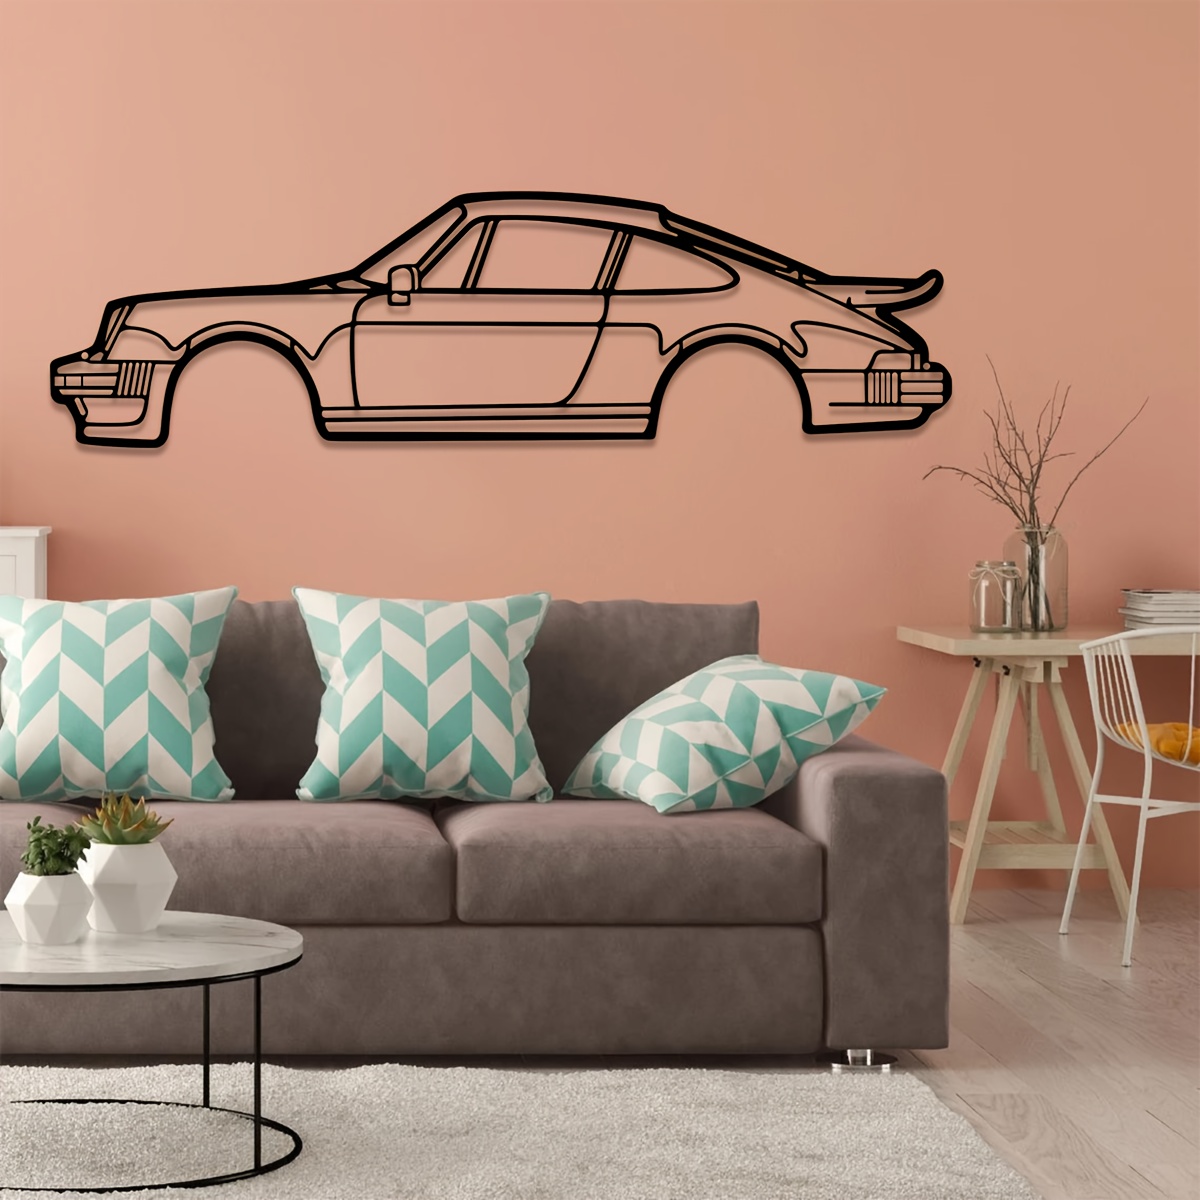  Creativo pintado decoración del hogar coche forma